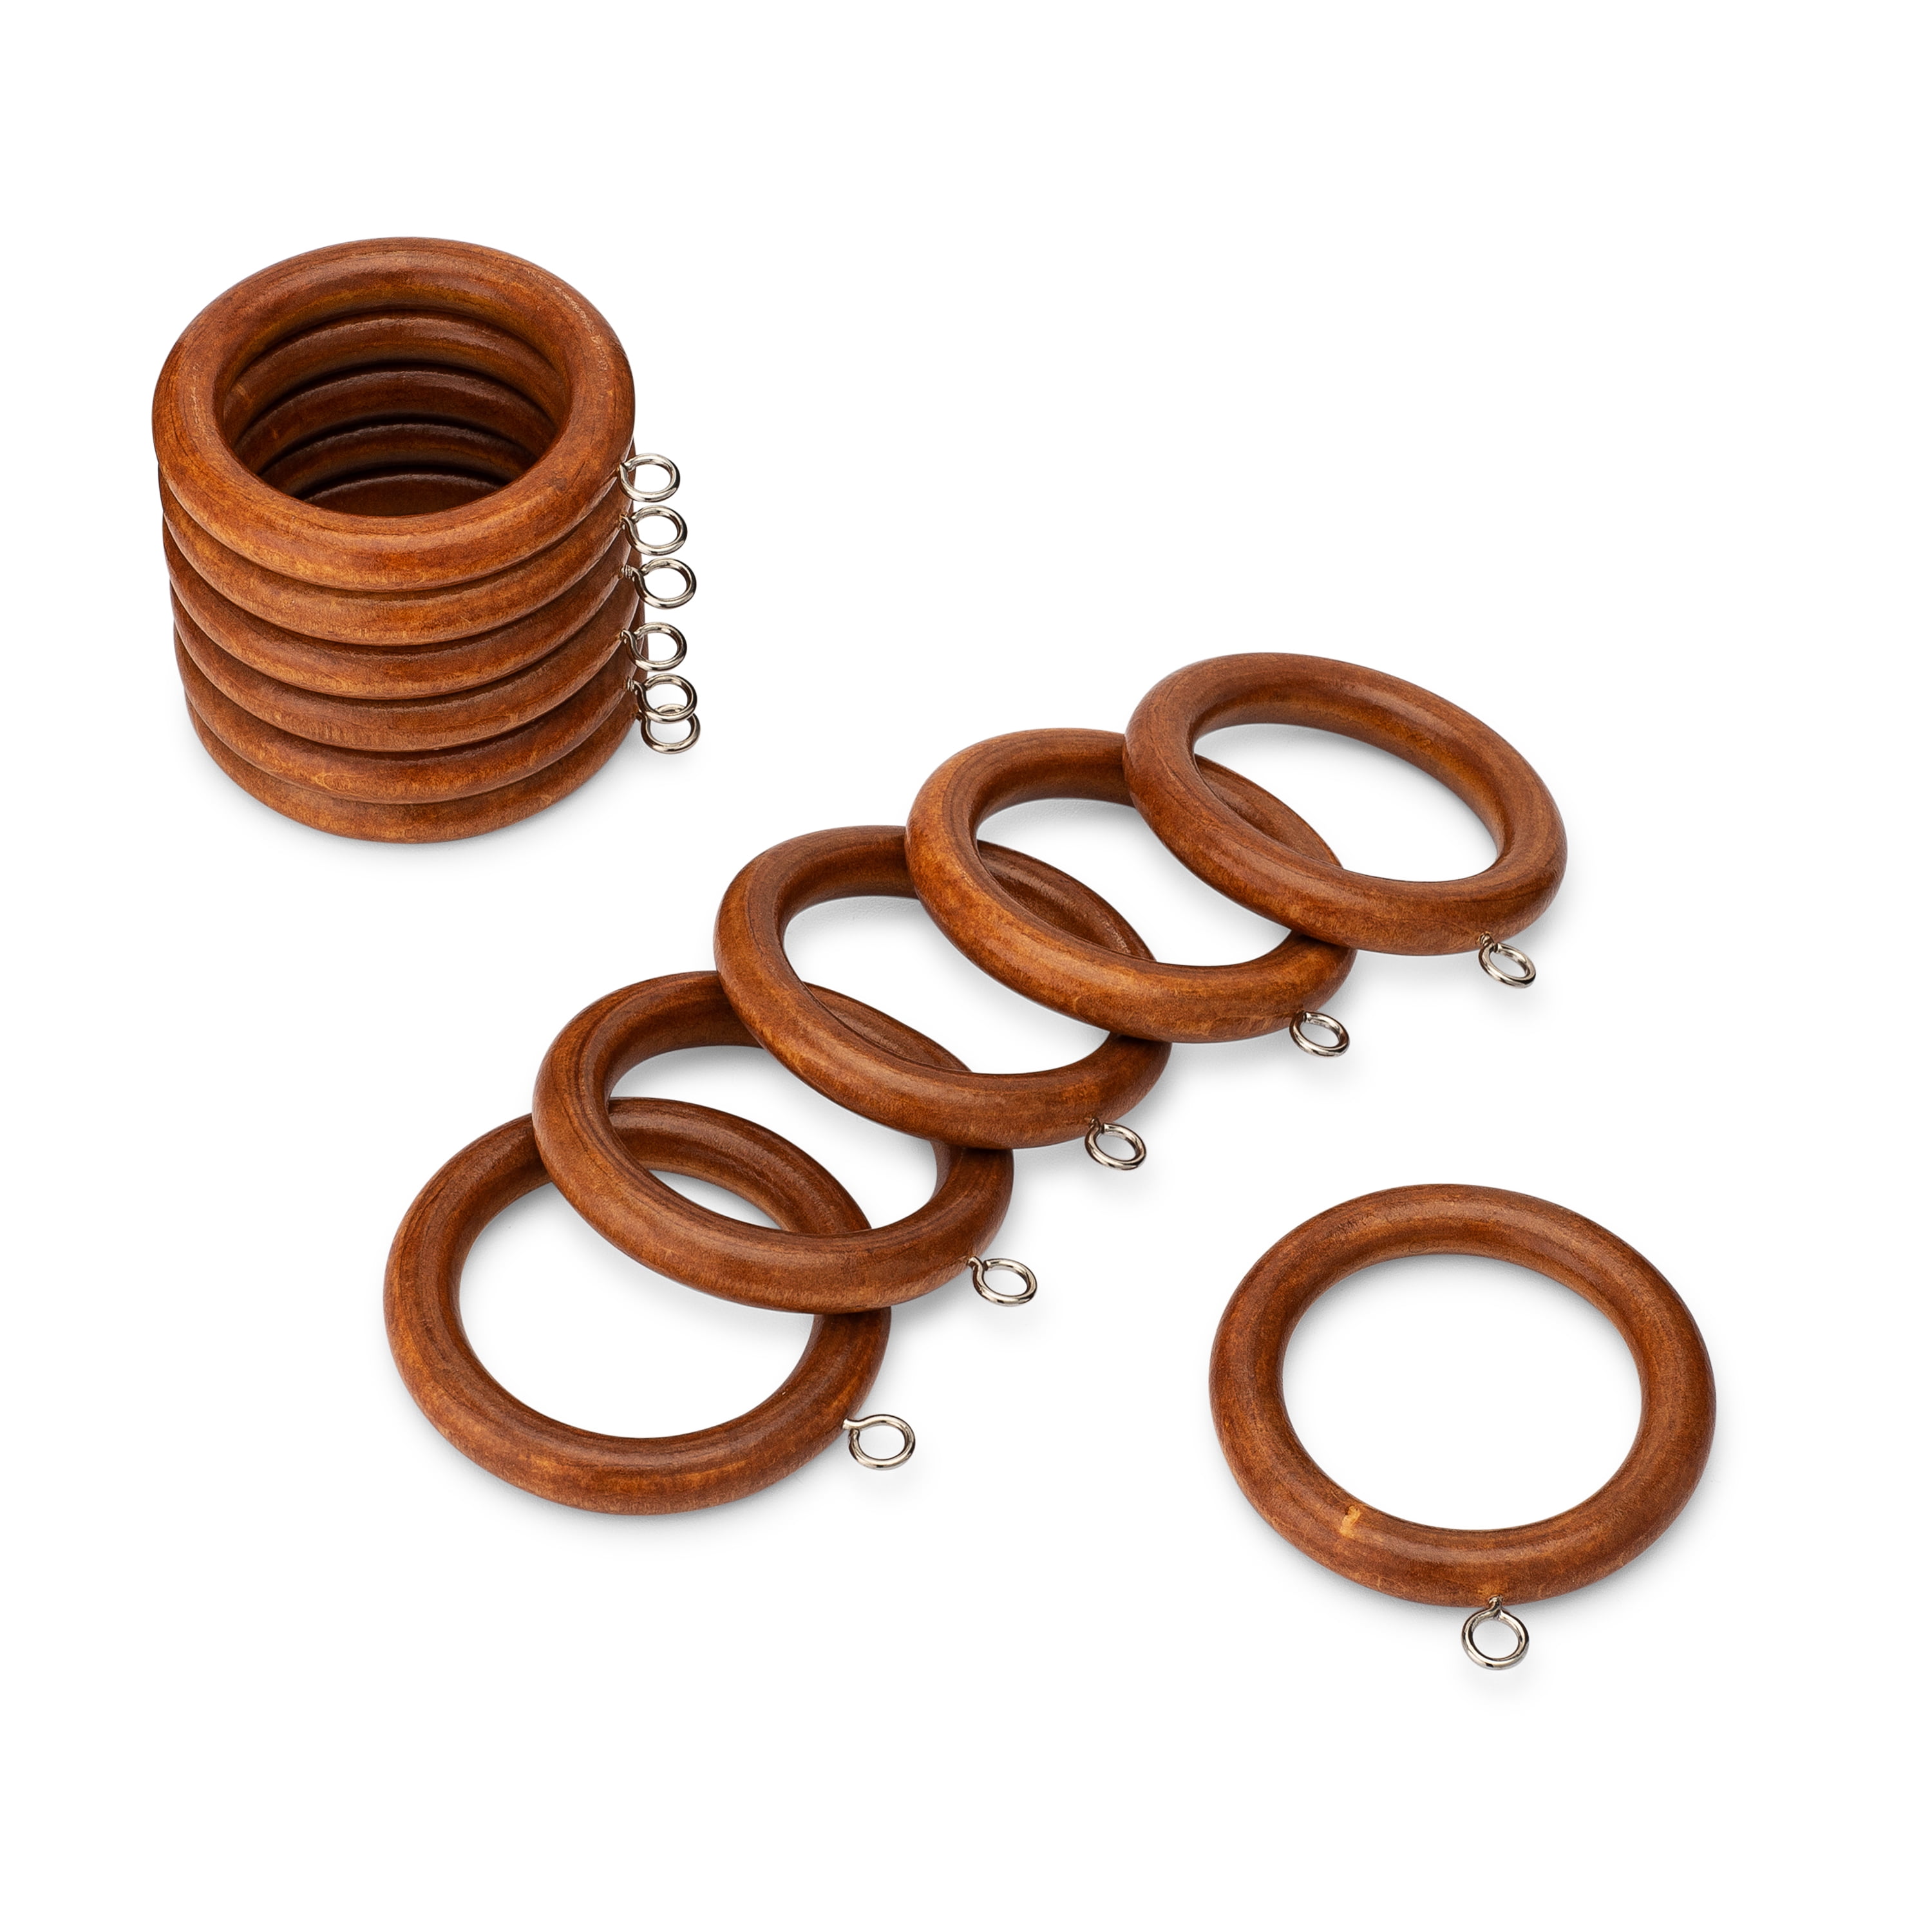 Curtain rings bronze metal heavy duty w/eyelet 2 1/4" fits 1 1/2" rod lot of 17 